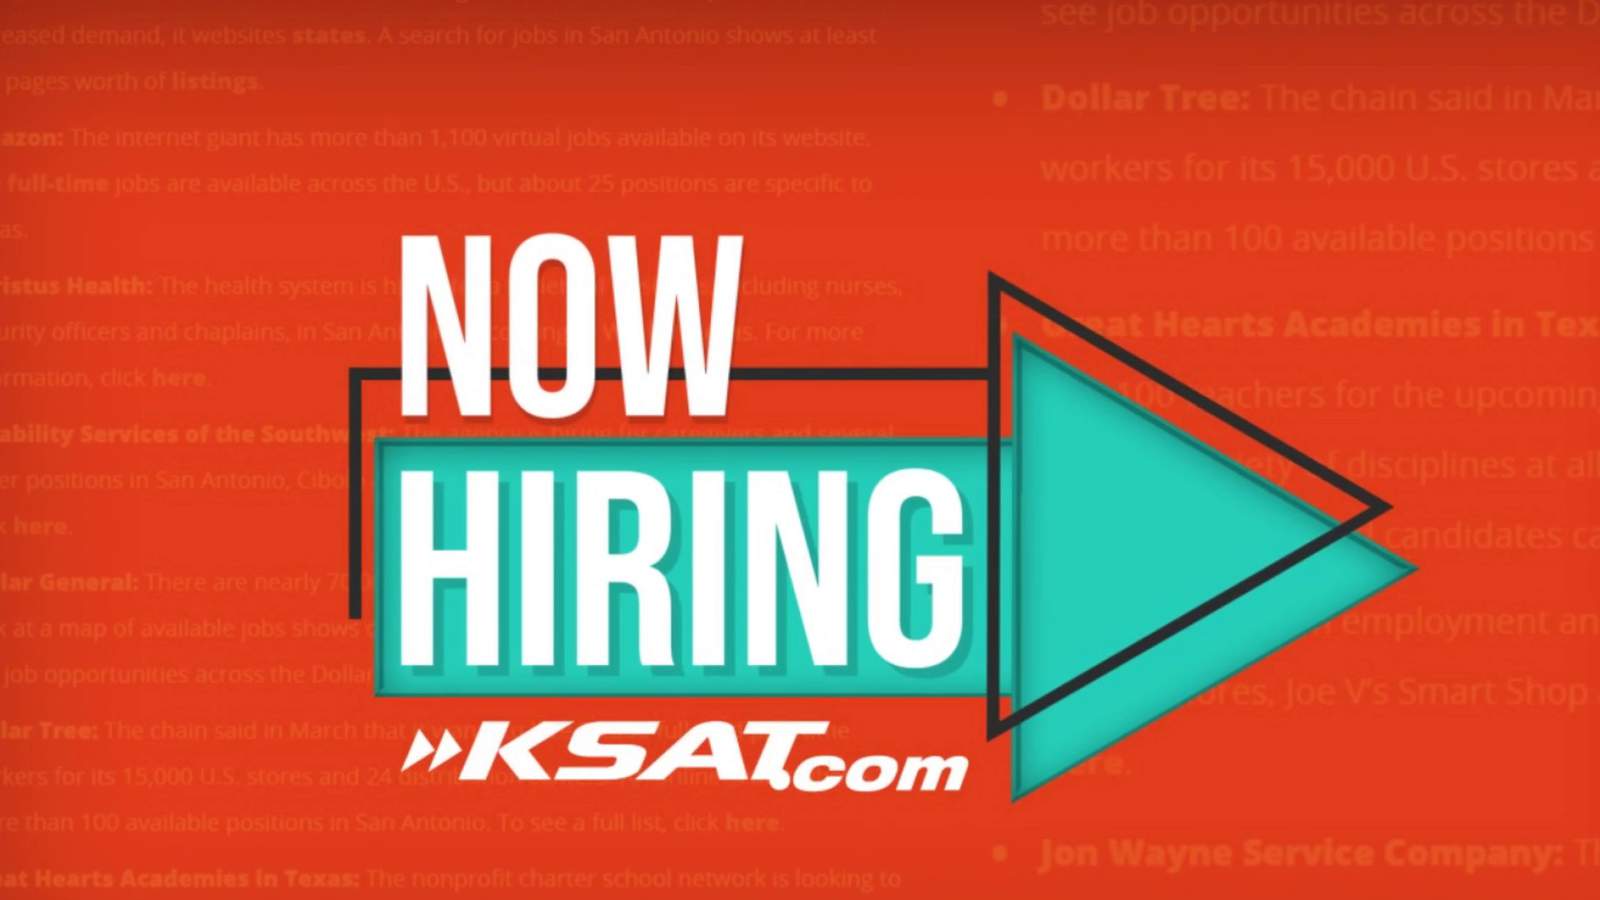 Need a job? Check out KSAT12's "Now Hiring" section on ksat.com